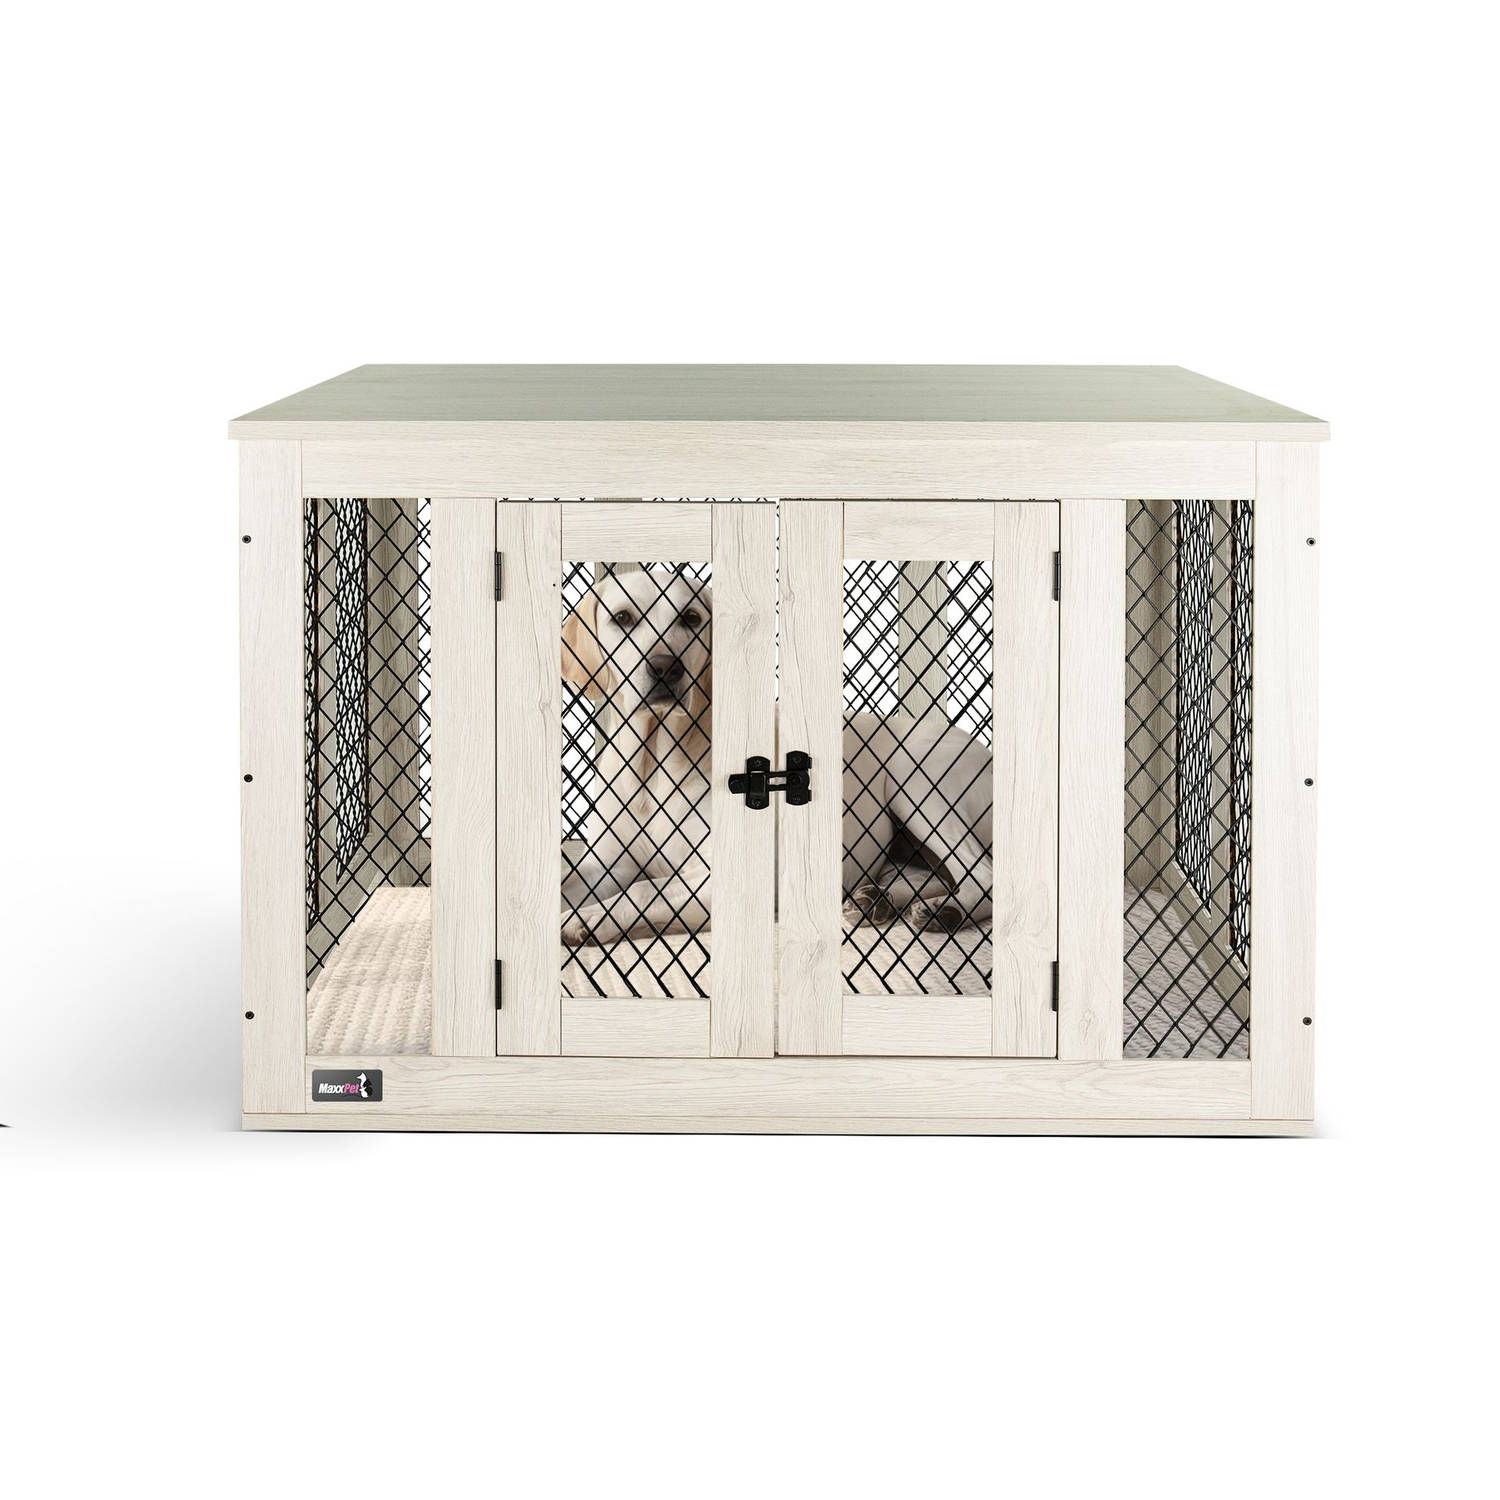 MaxxPet Houten Hondenbench - Hondenhuisje voor binnen - Hondenhok - kennel - 94x60x72cm